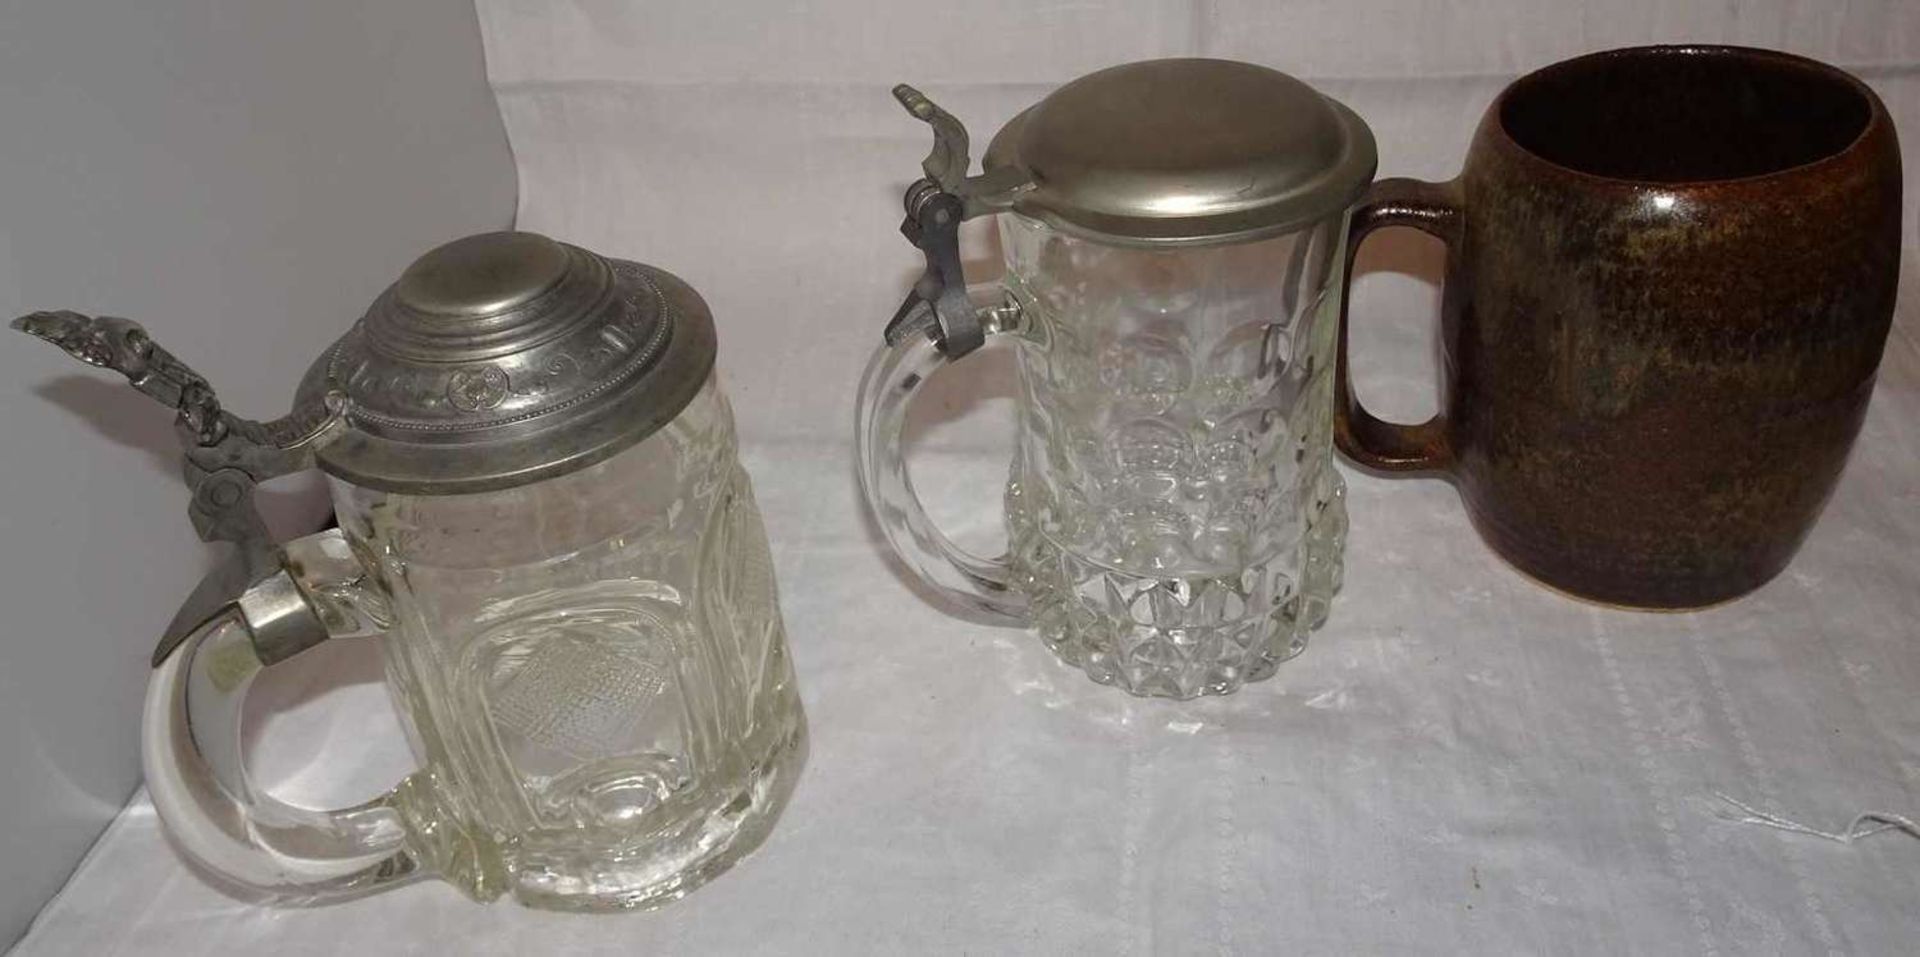 2 Glasbierkrüge mit Zinndeckel. sowie 1 Keramikkrug "100 Jahre Stadtwerke Frankenthal"2 glass beer